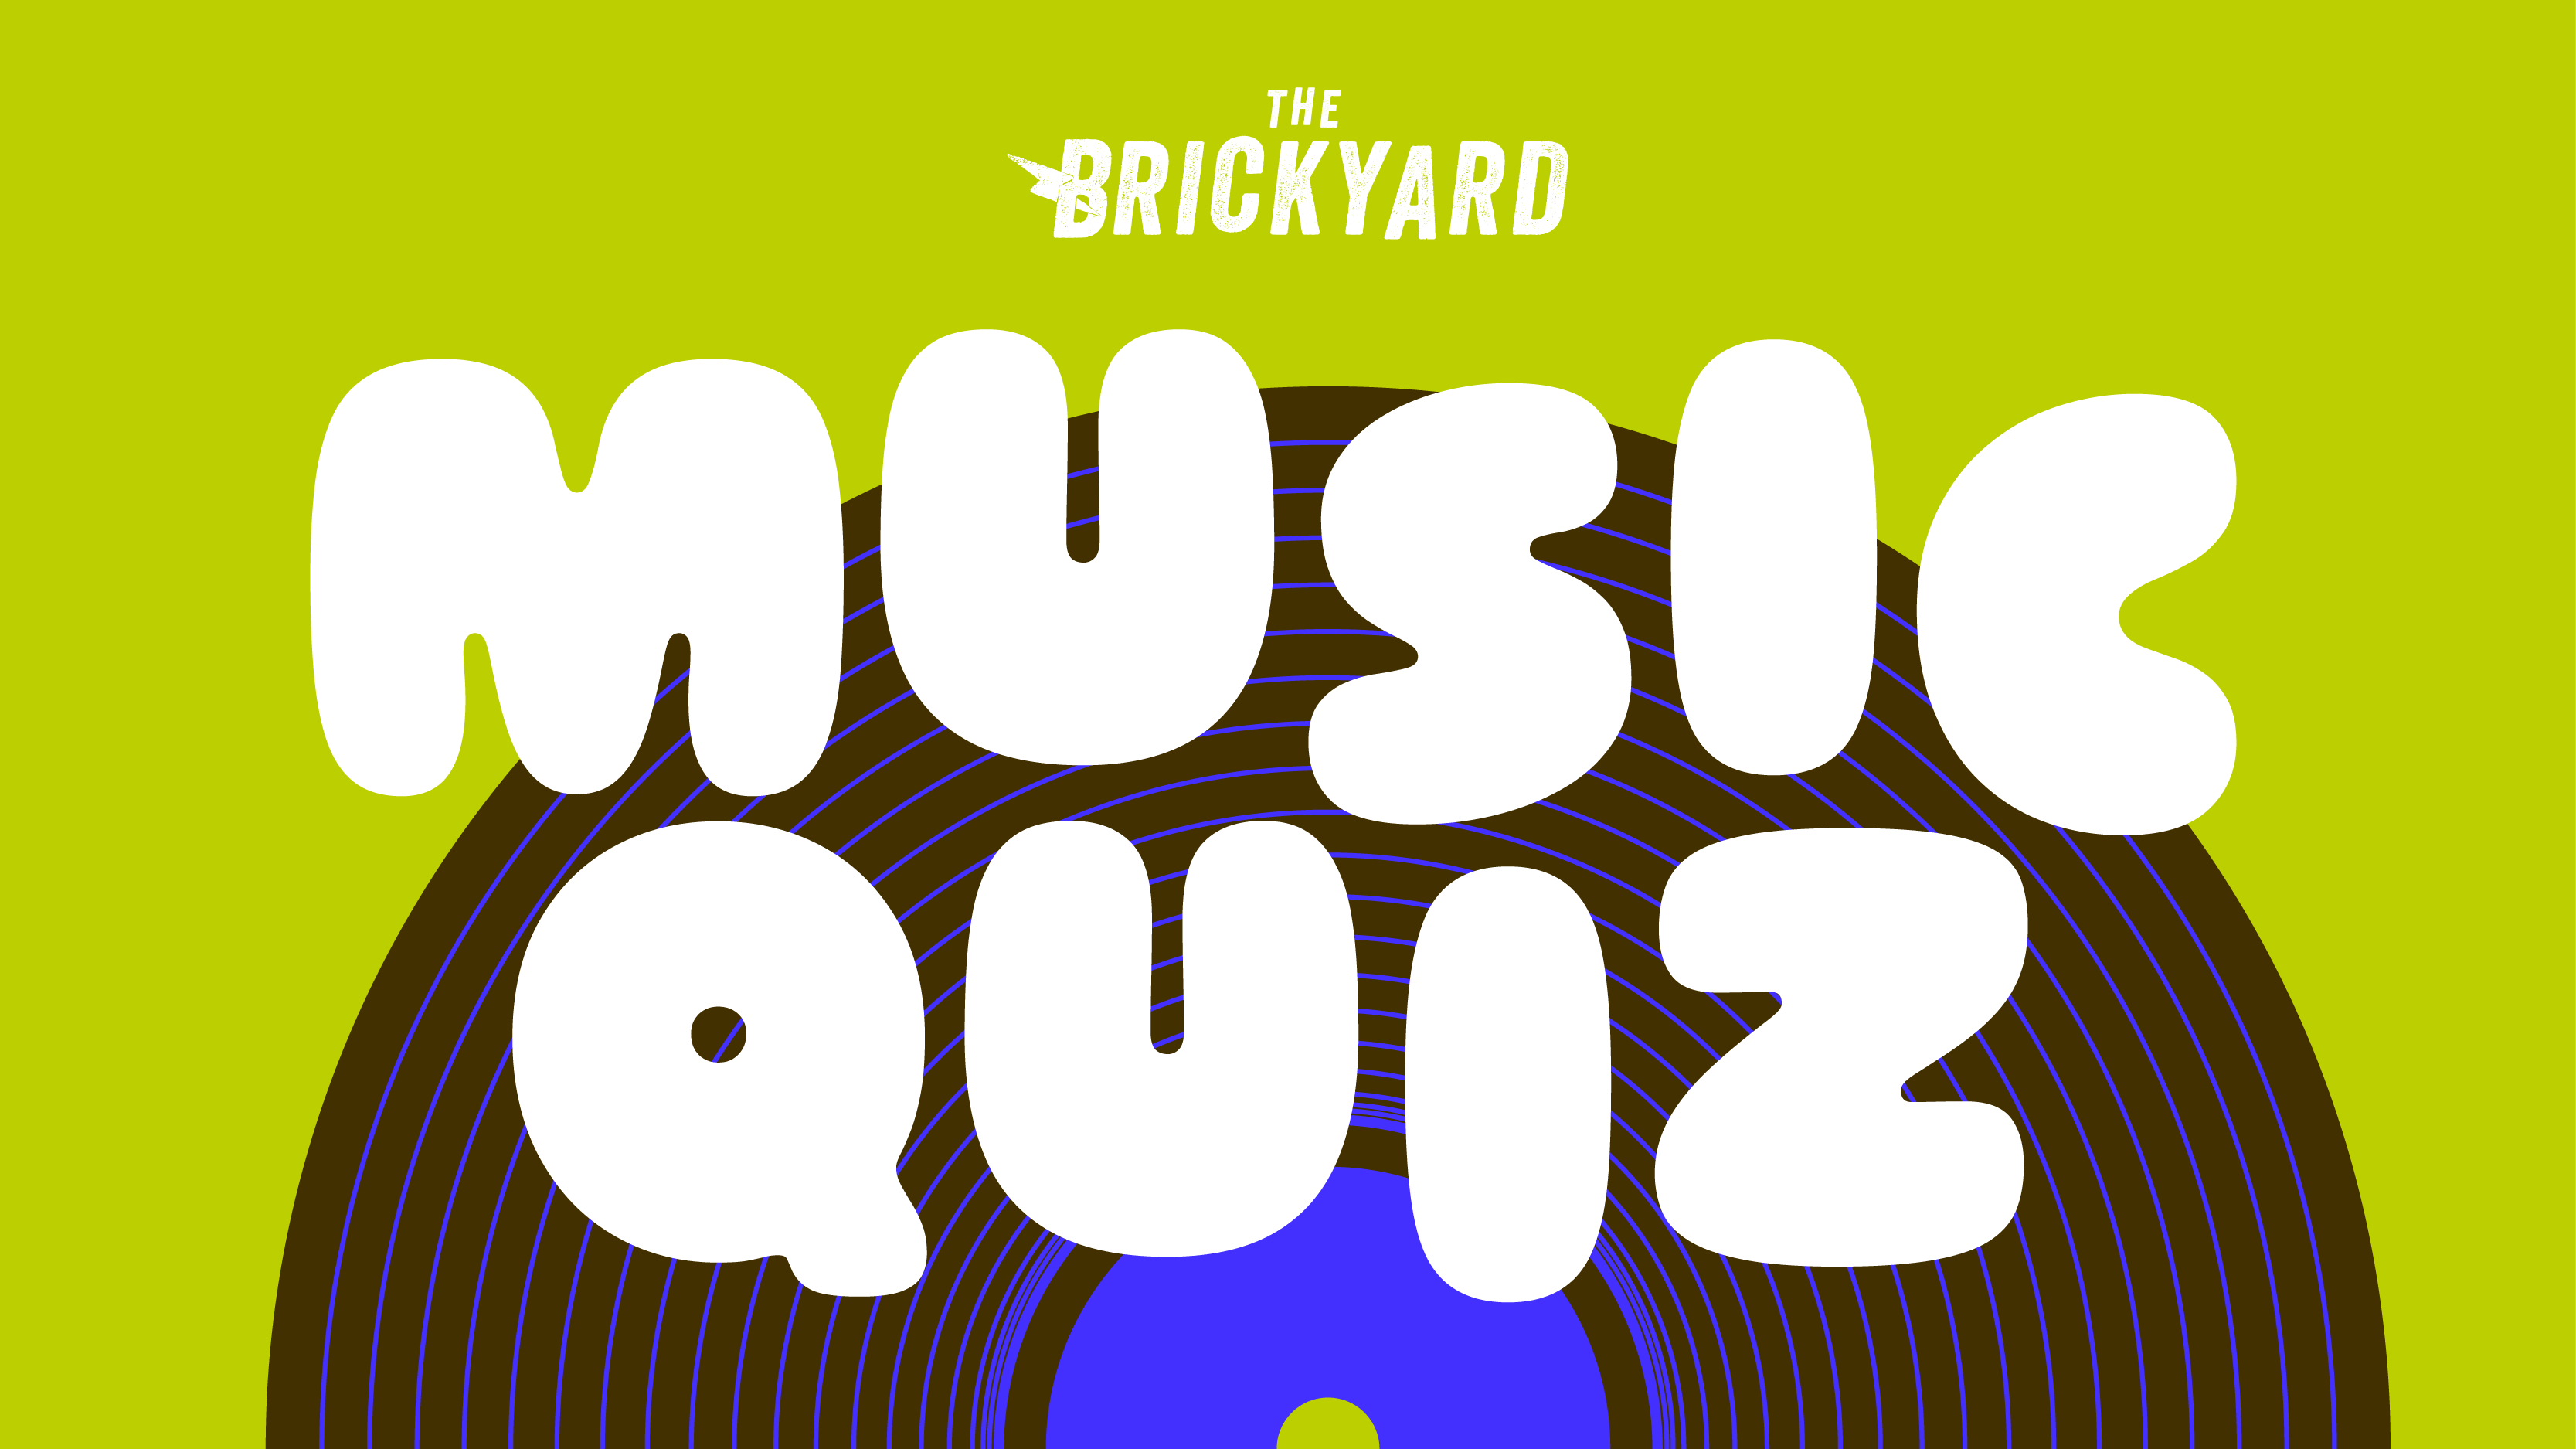 The Brickyard Music Quiz